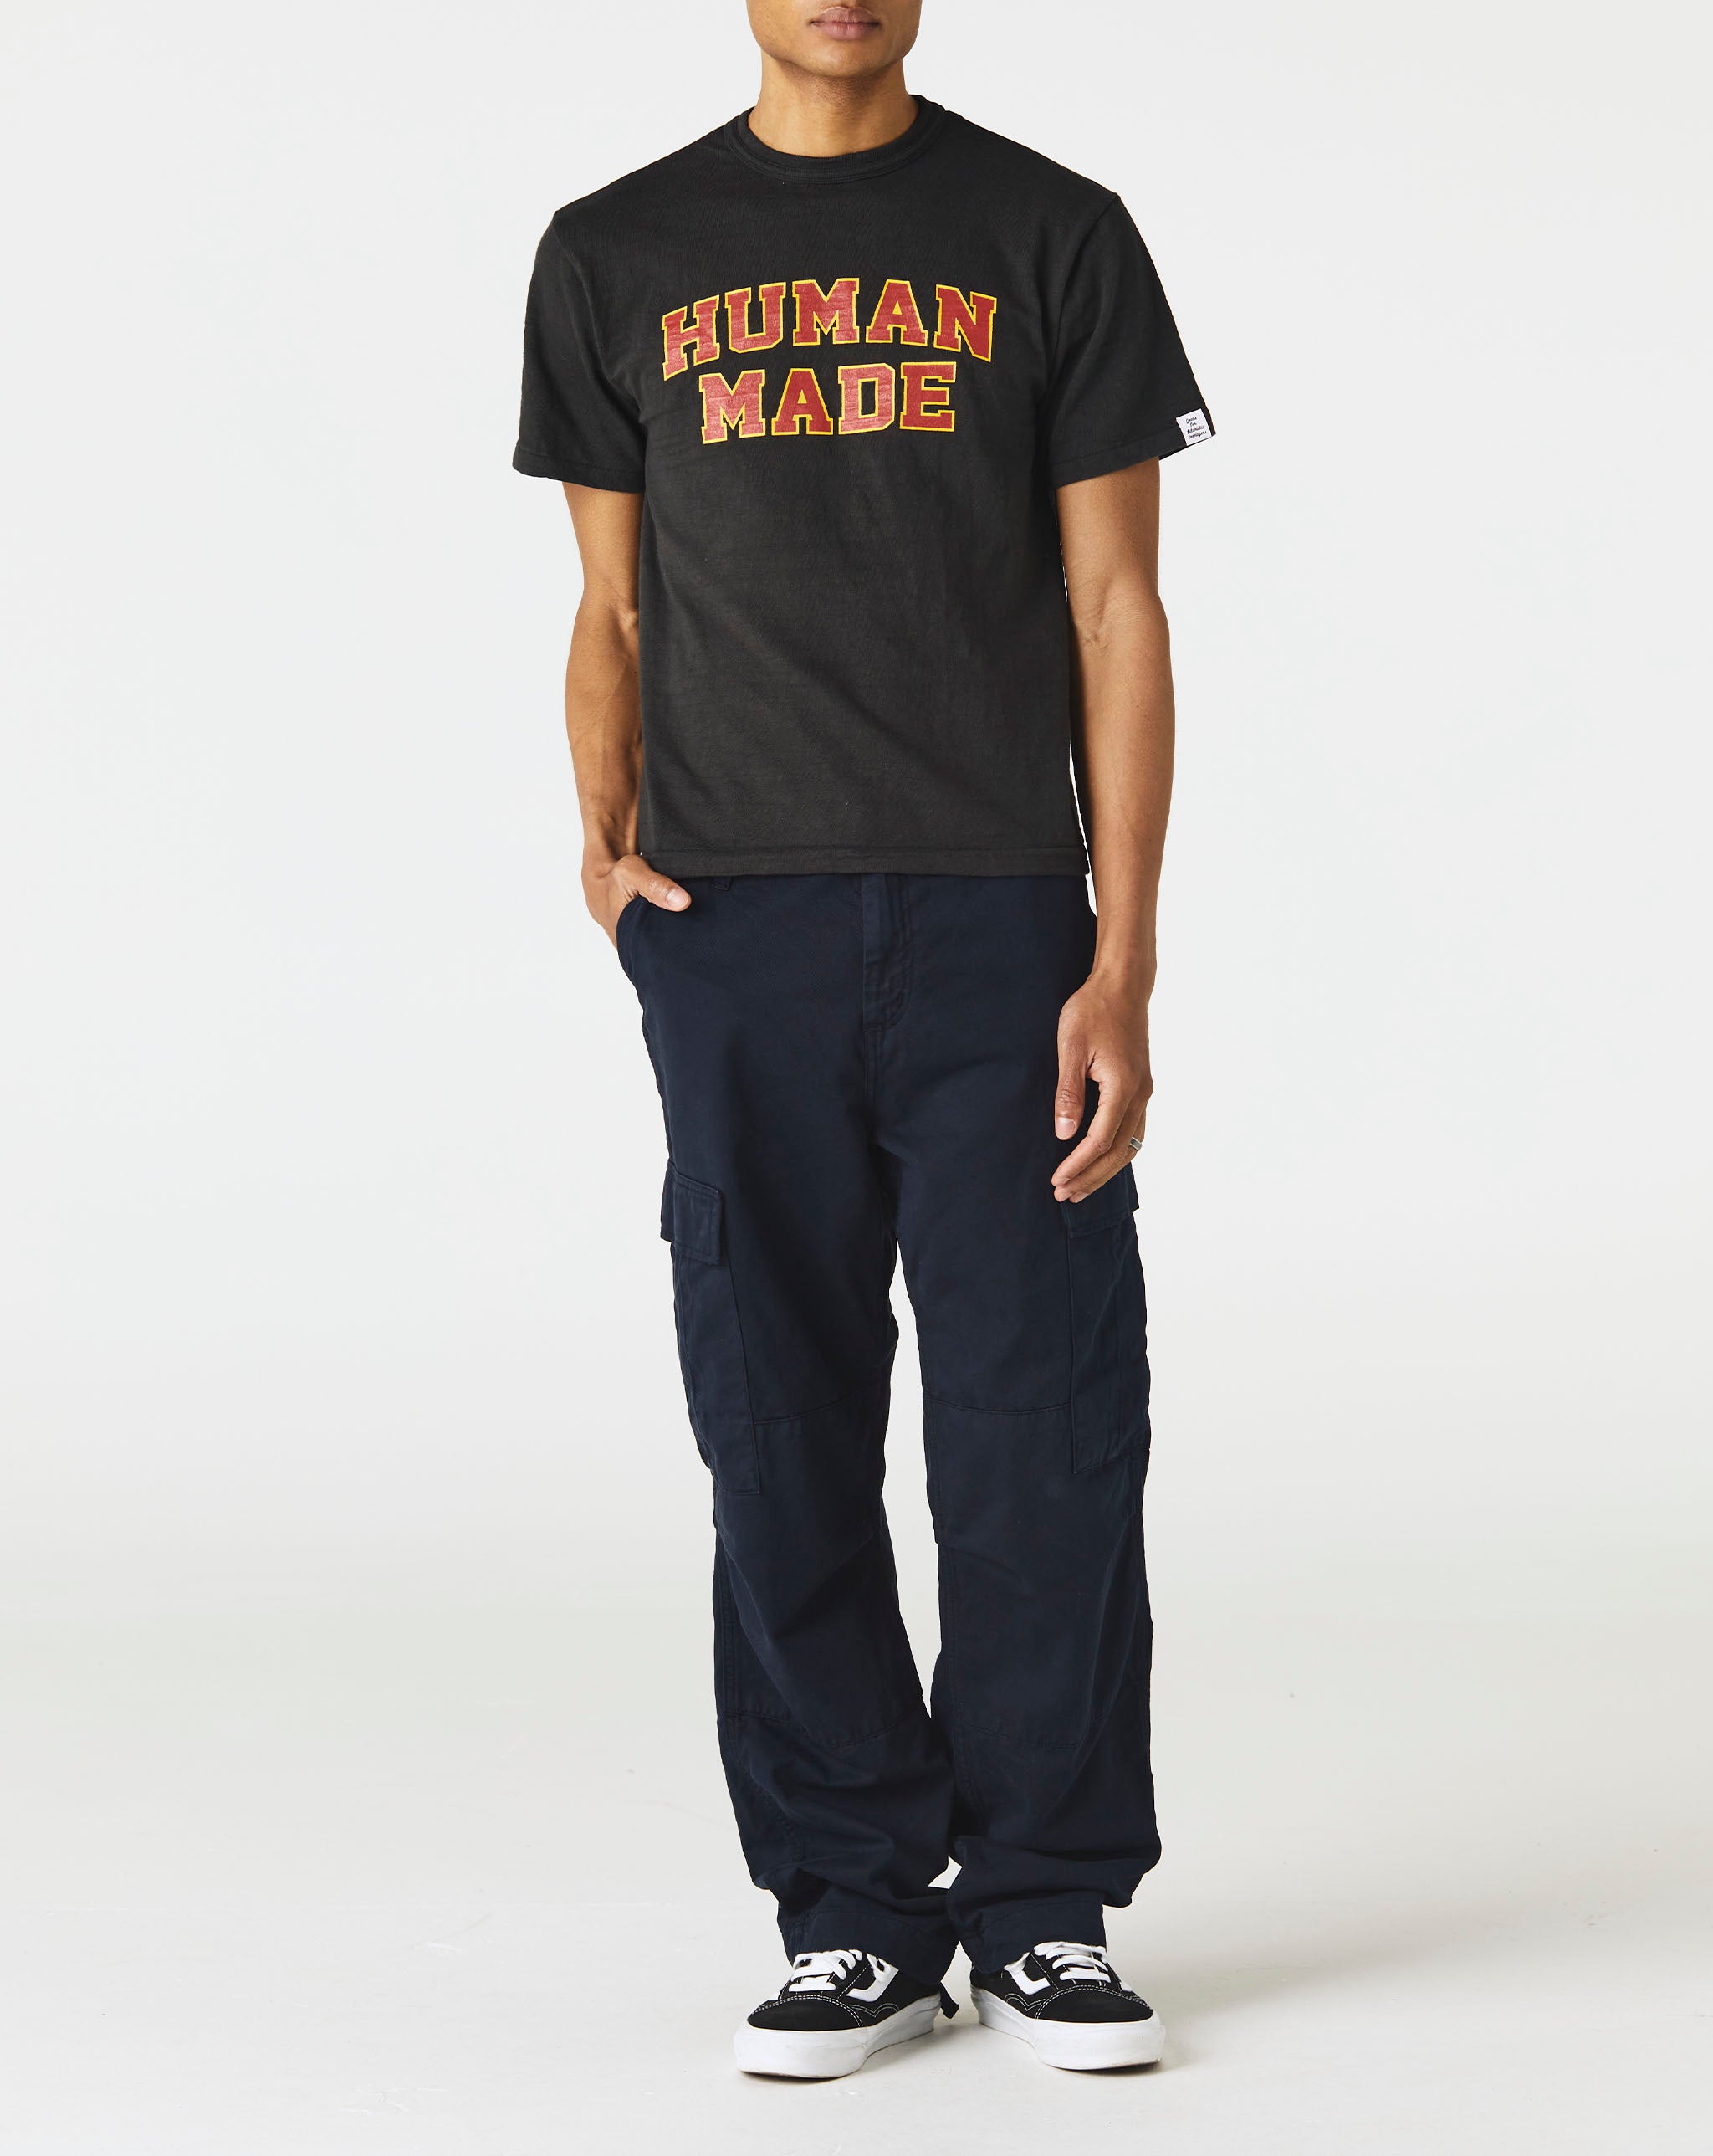 Human Made T-Shirt #2307 – Xhibition